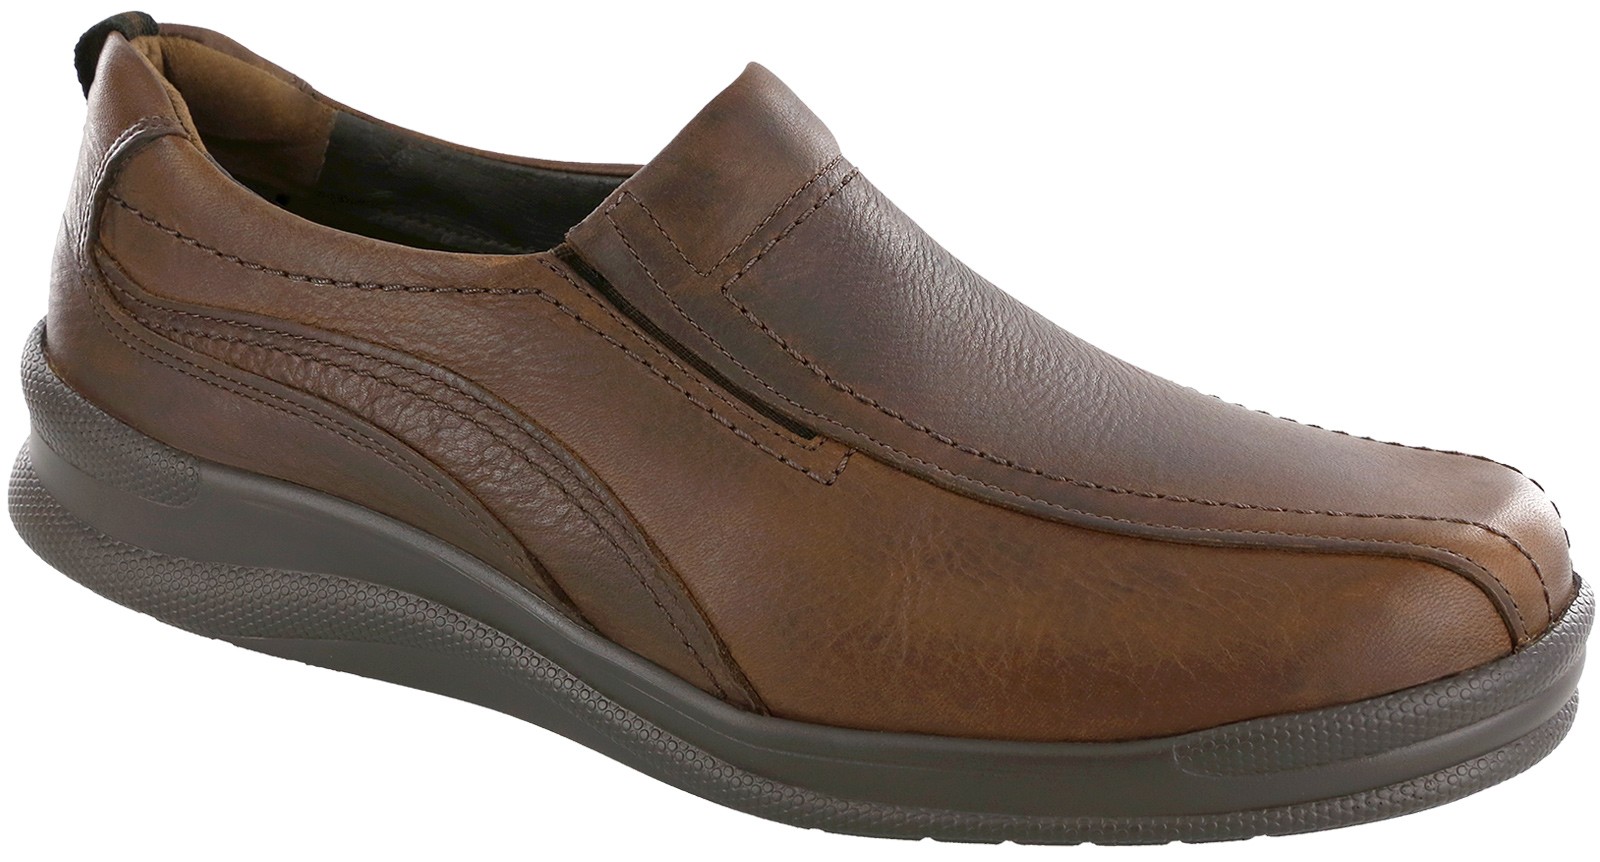 Ensor's Comfort Shoes - Betty's Blog: CRUISE ON Slip-on for Men by SAS®